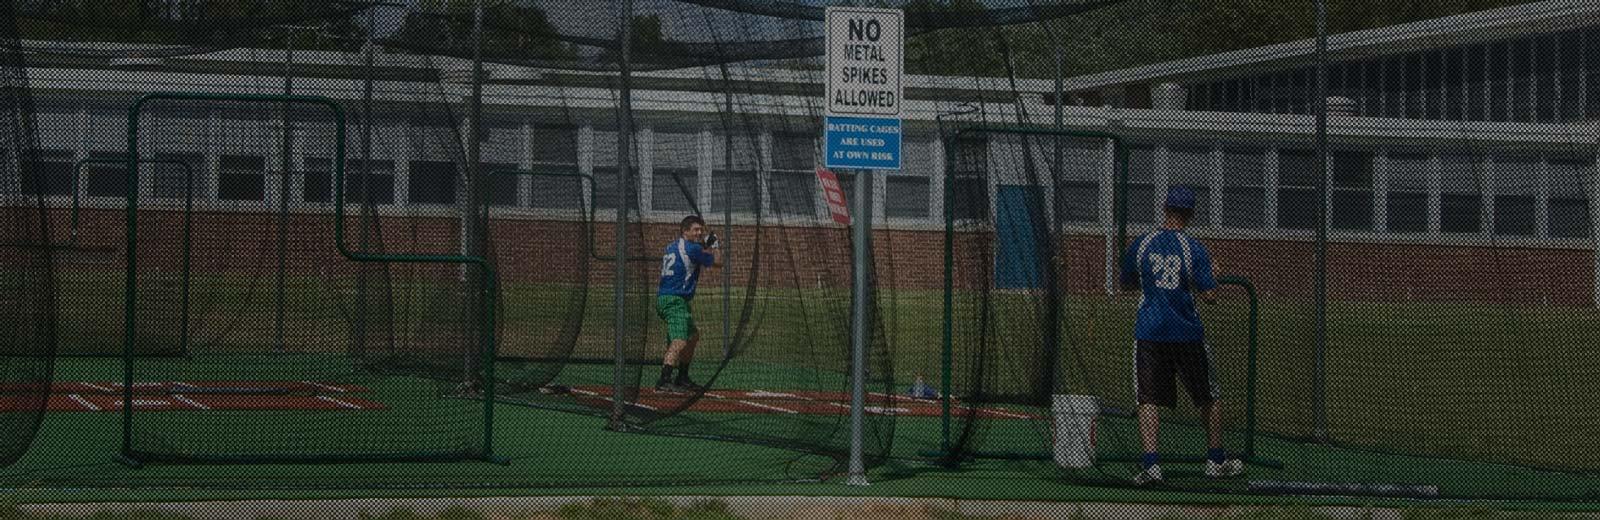 Artificial Turf For Baseball & Softball Batting Cages